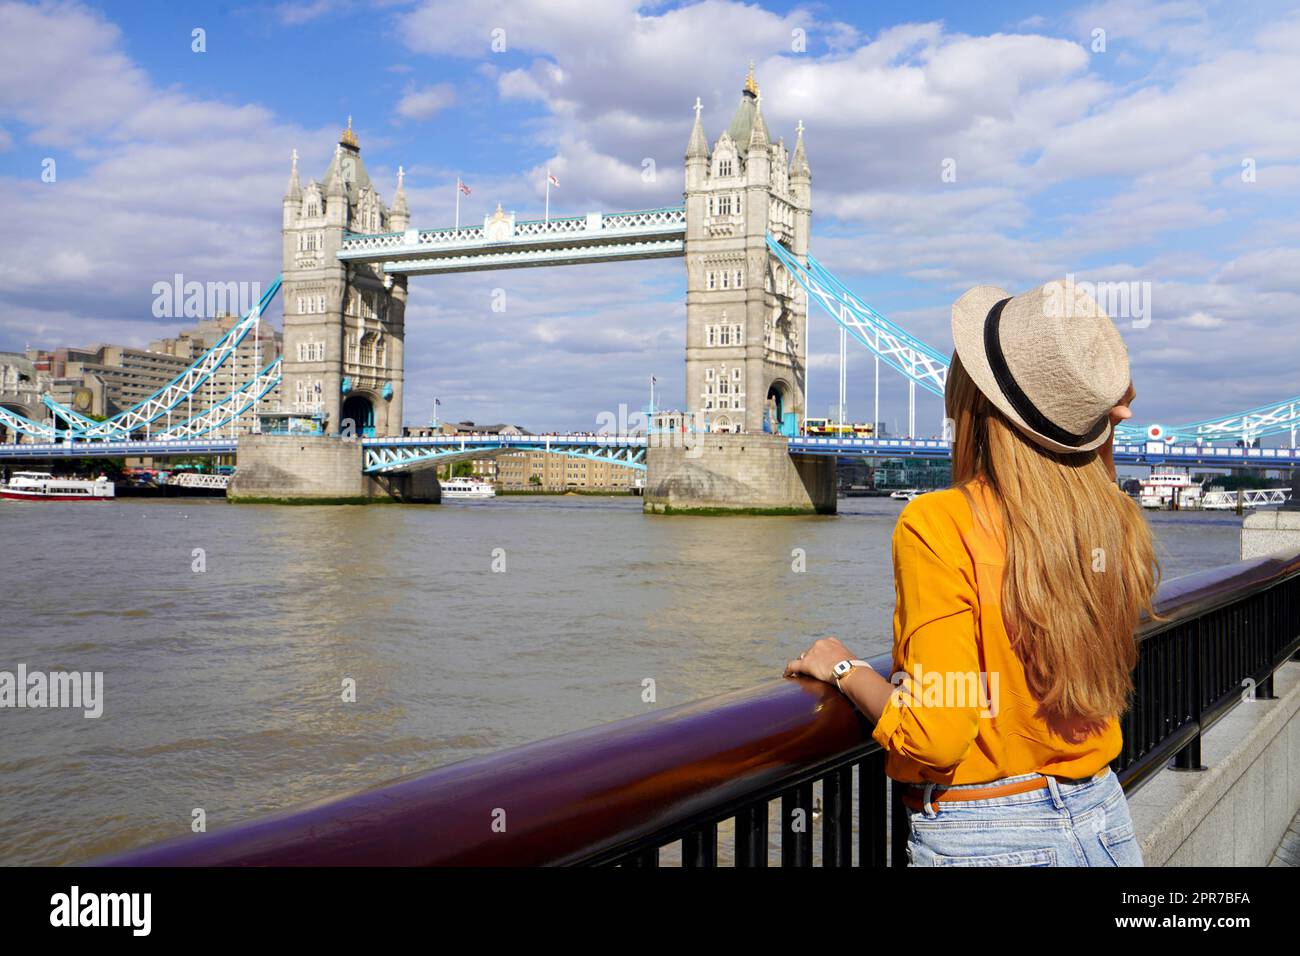 Tourist girl leaning on the railing on River Thames promenade with Tower Bridge famous landmark in London, UK Stock Photo